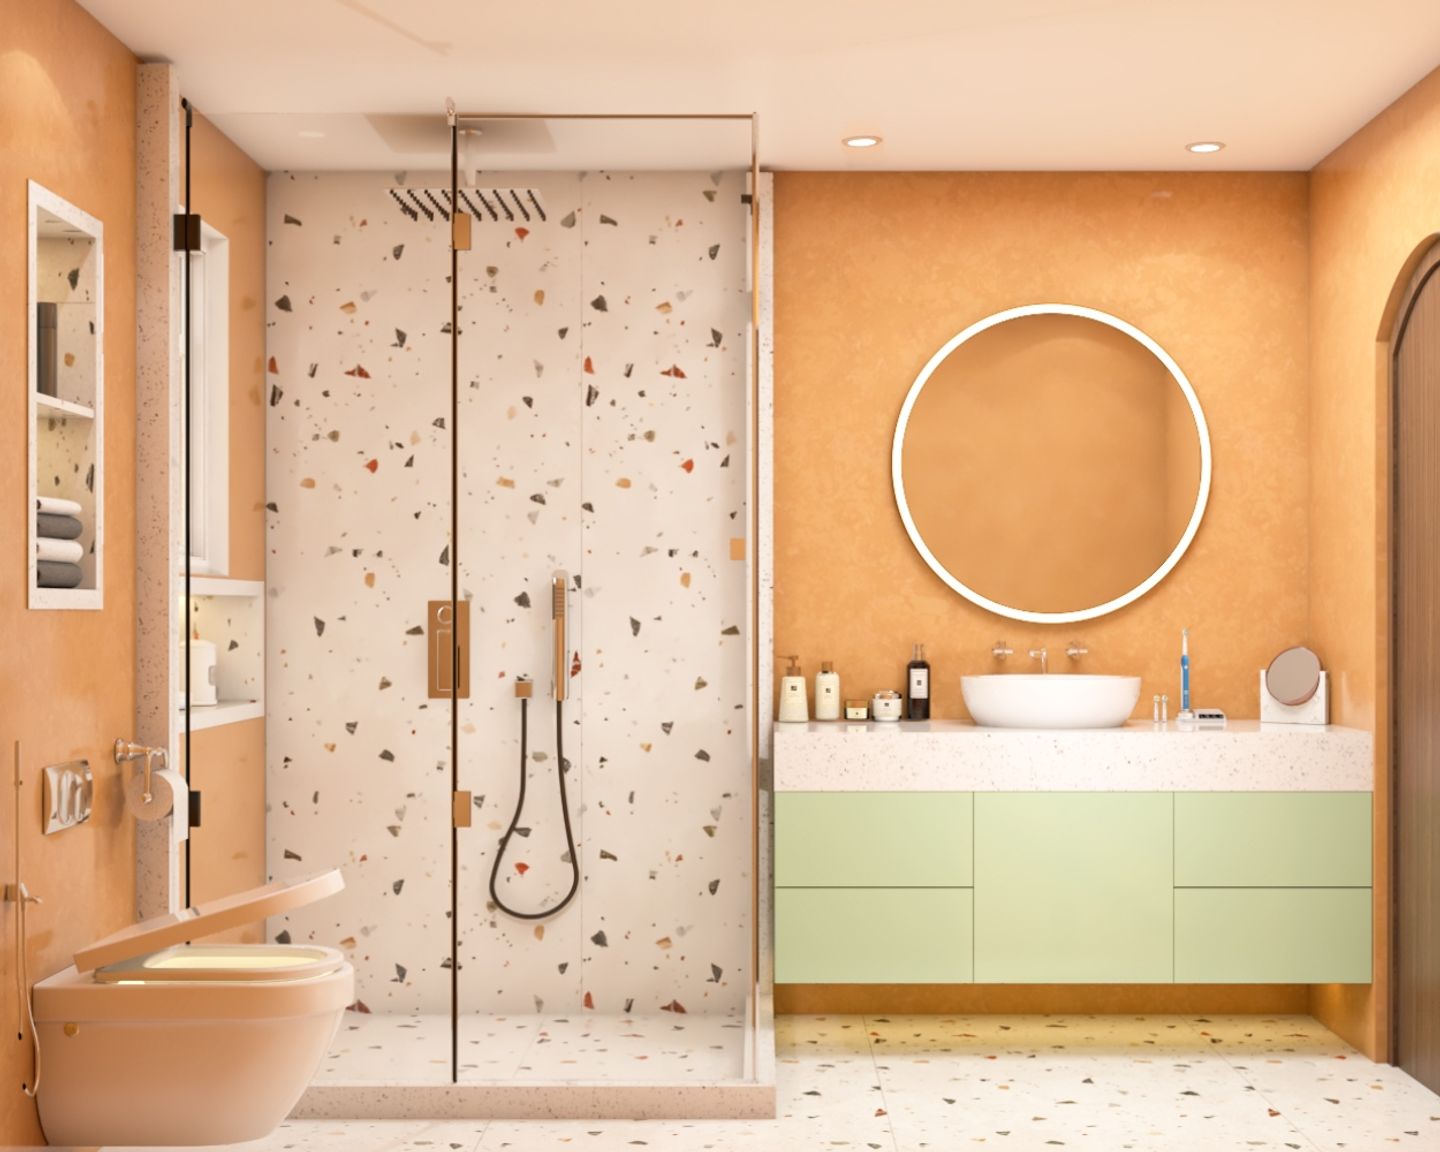 8X5 Ft Peach And White-Tiled Bathroom Design - Livspace